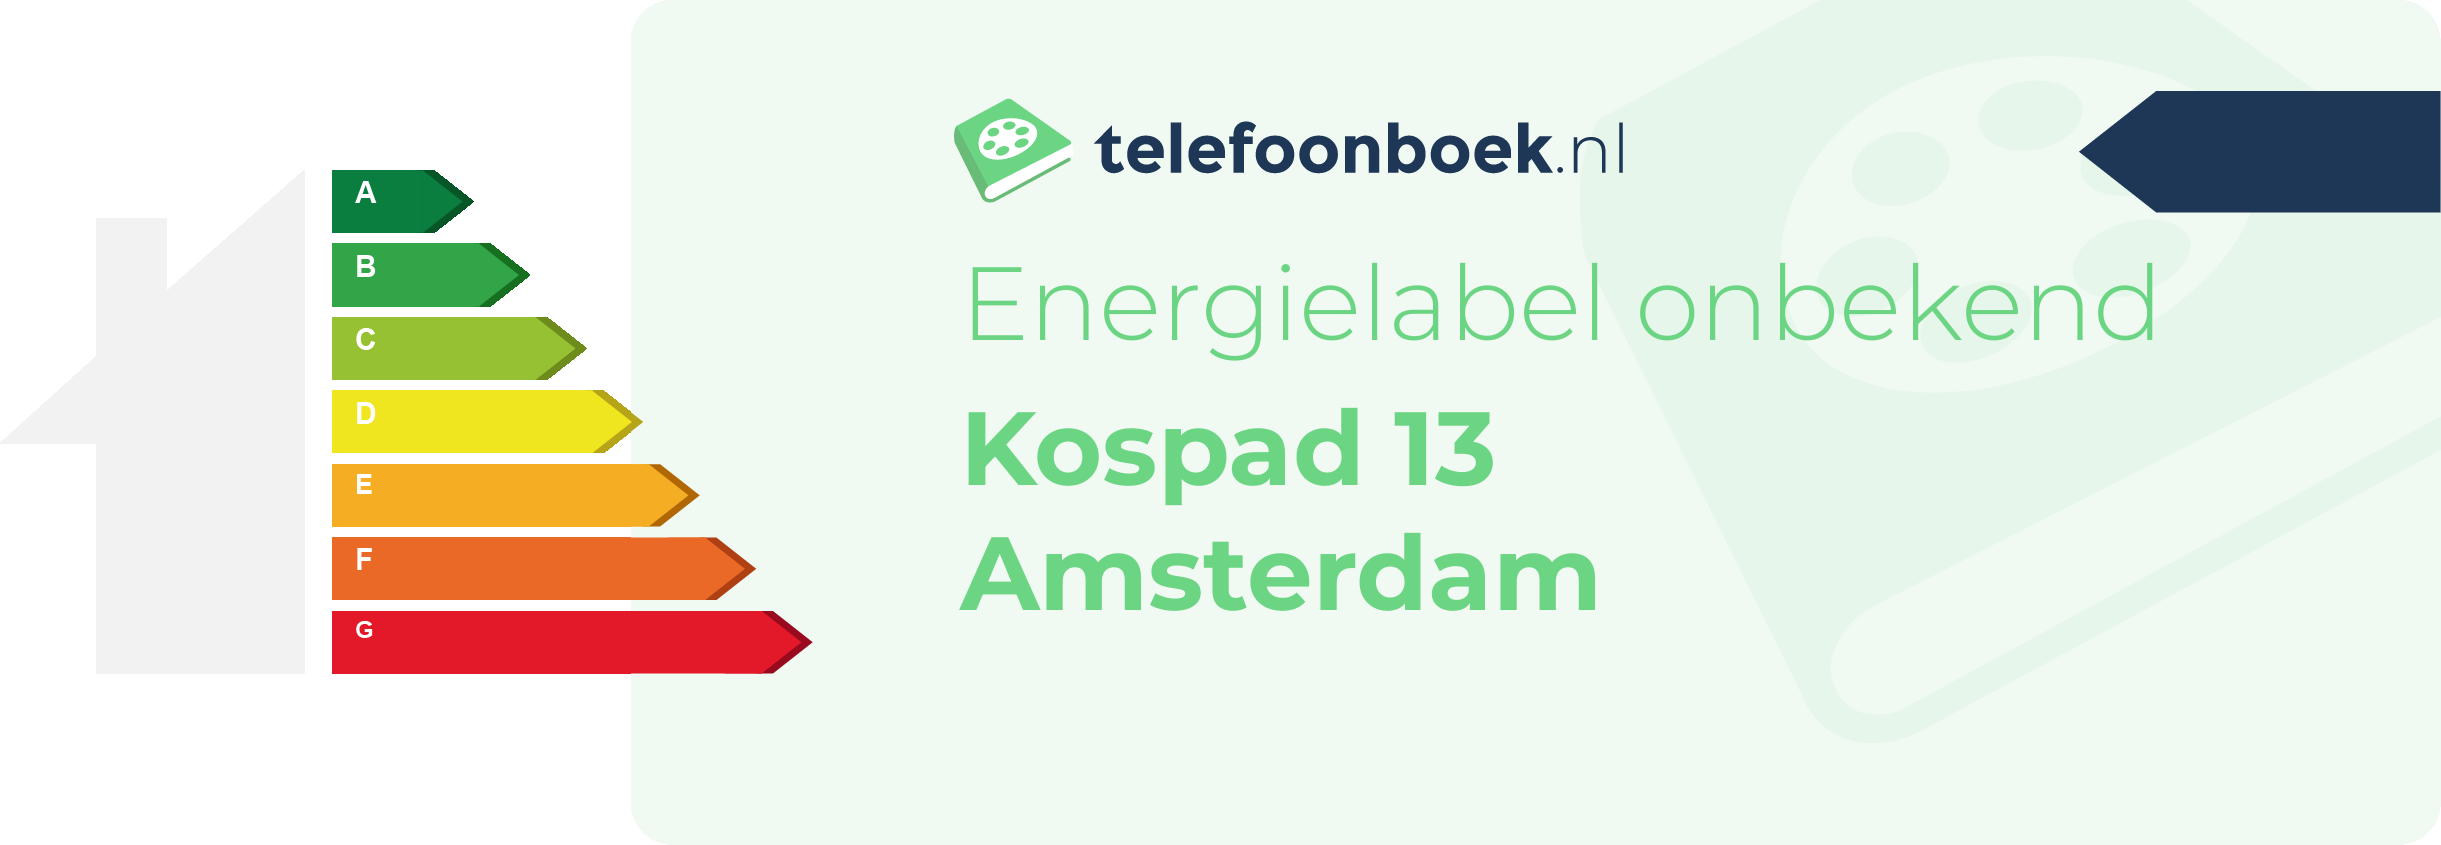 Energielabel Kospad 13 Amsterdam